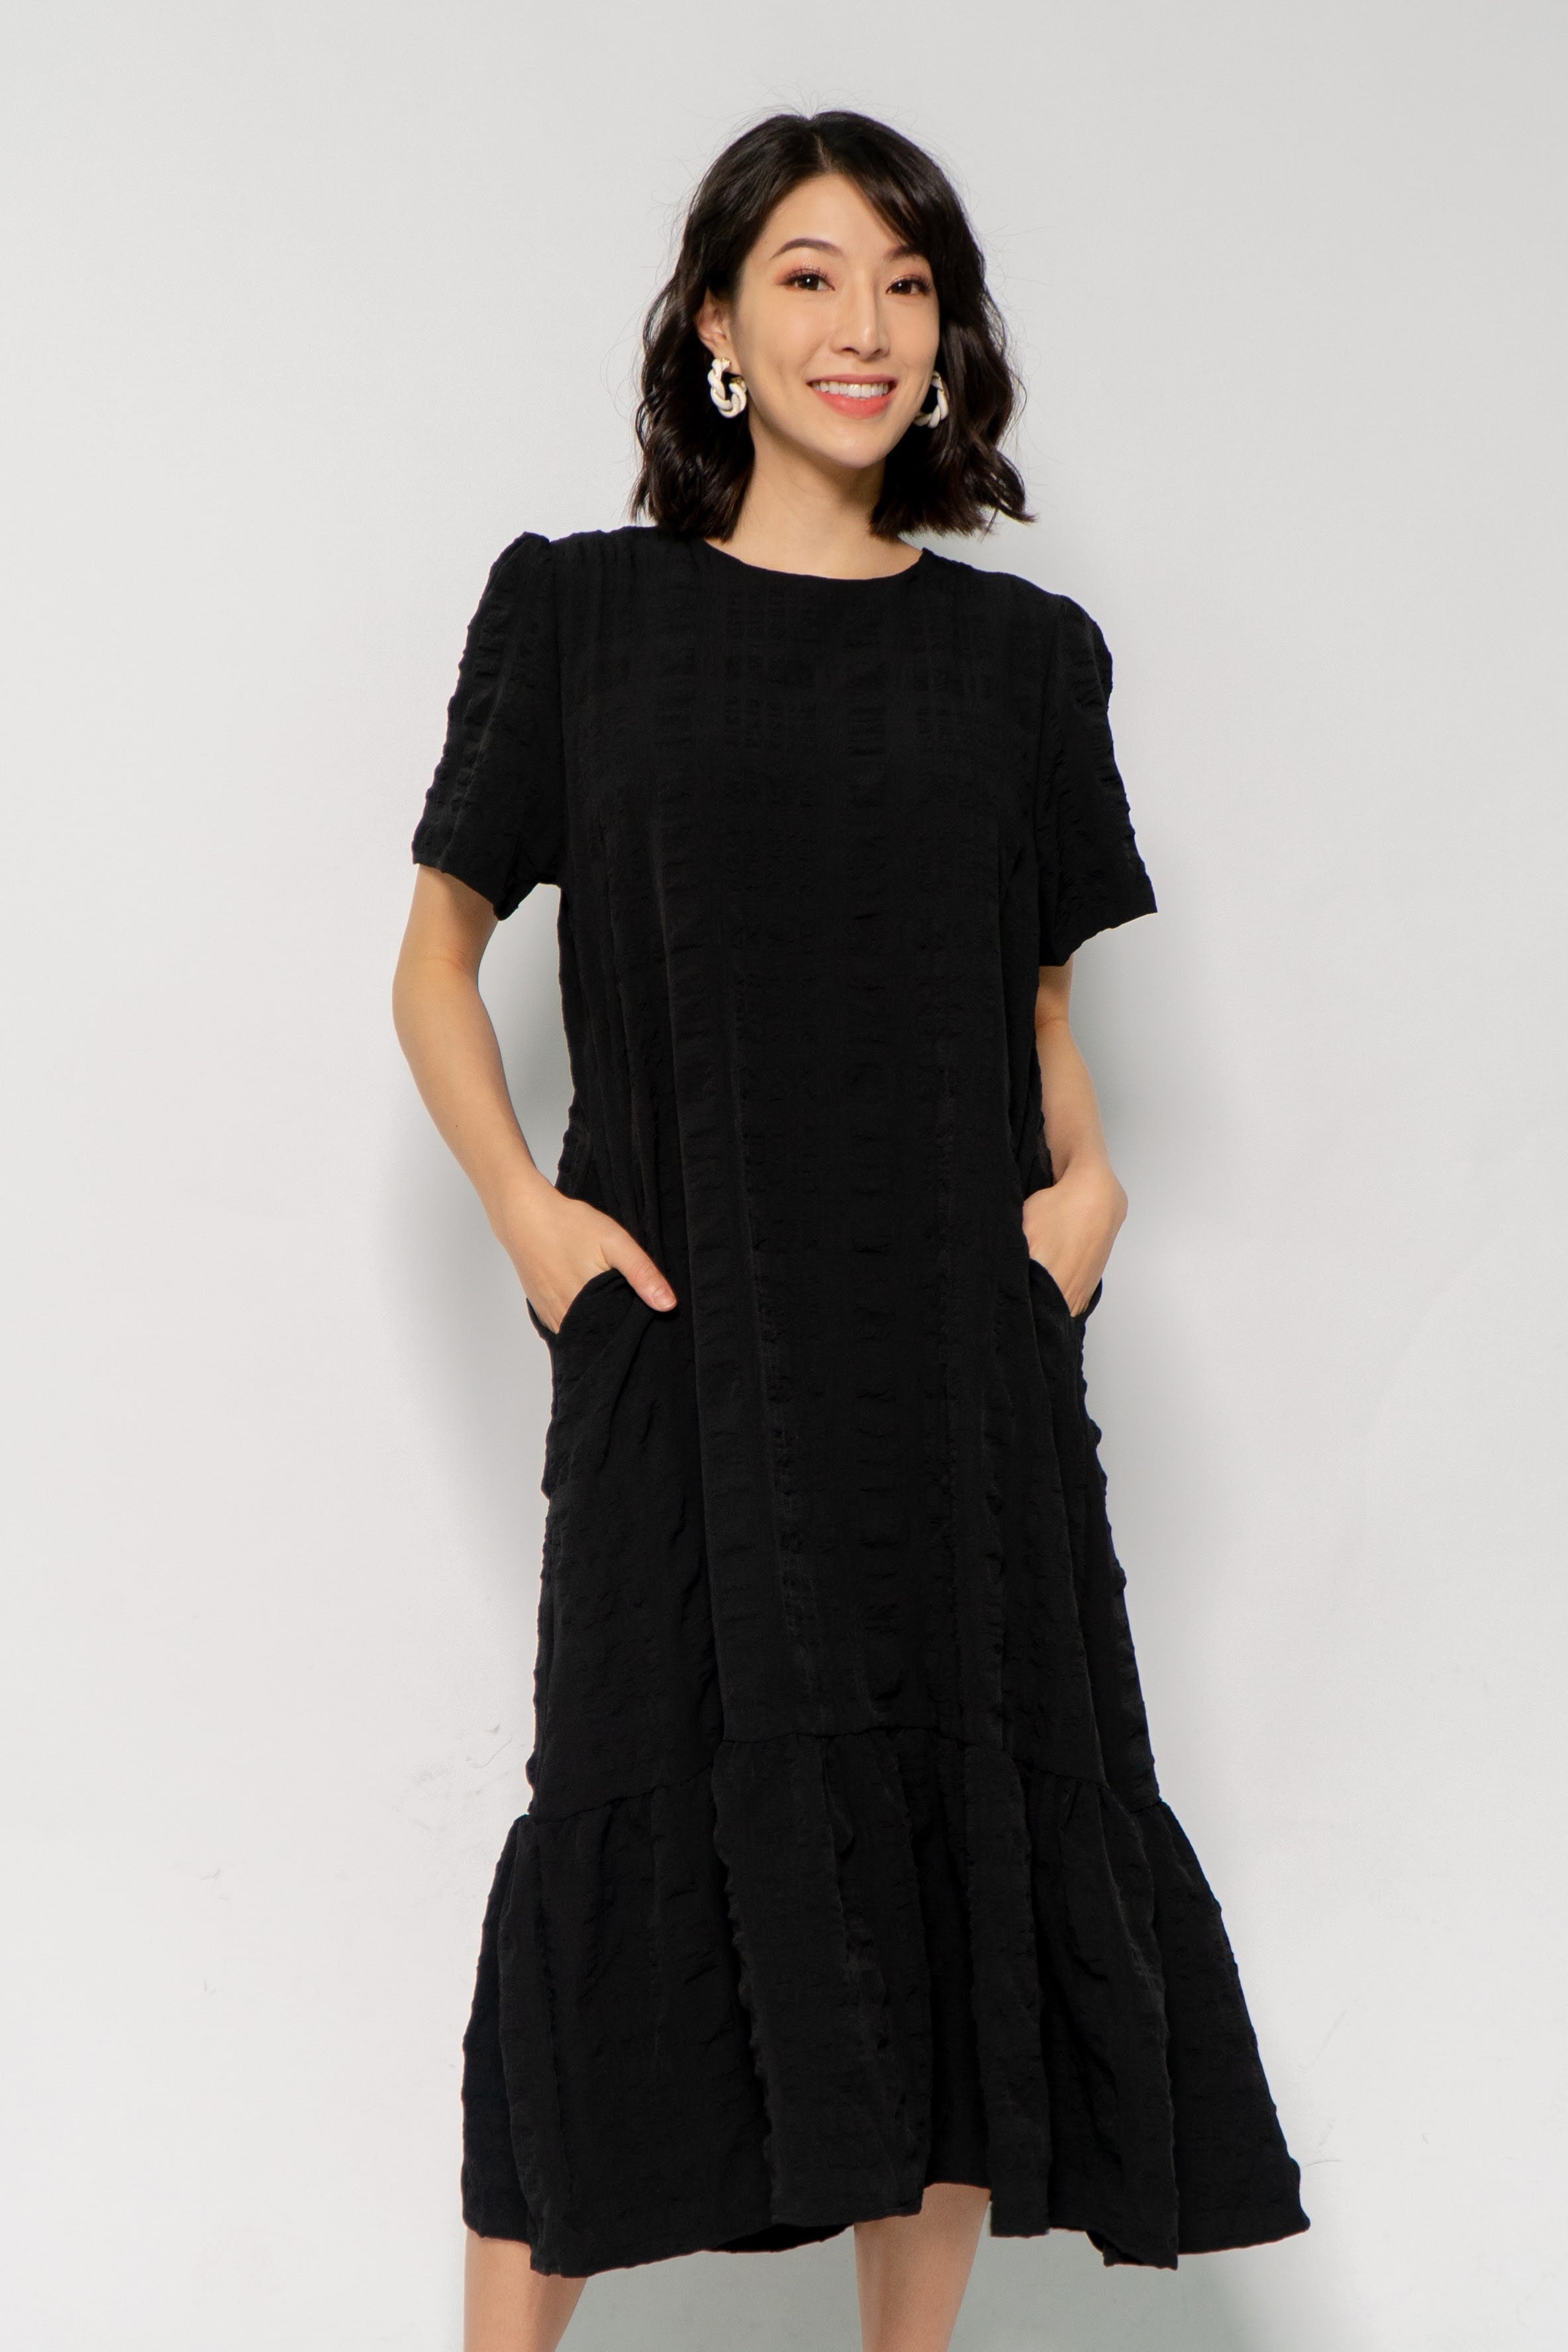 Backorders Xing Textured Dress in Black